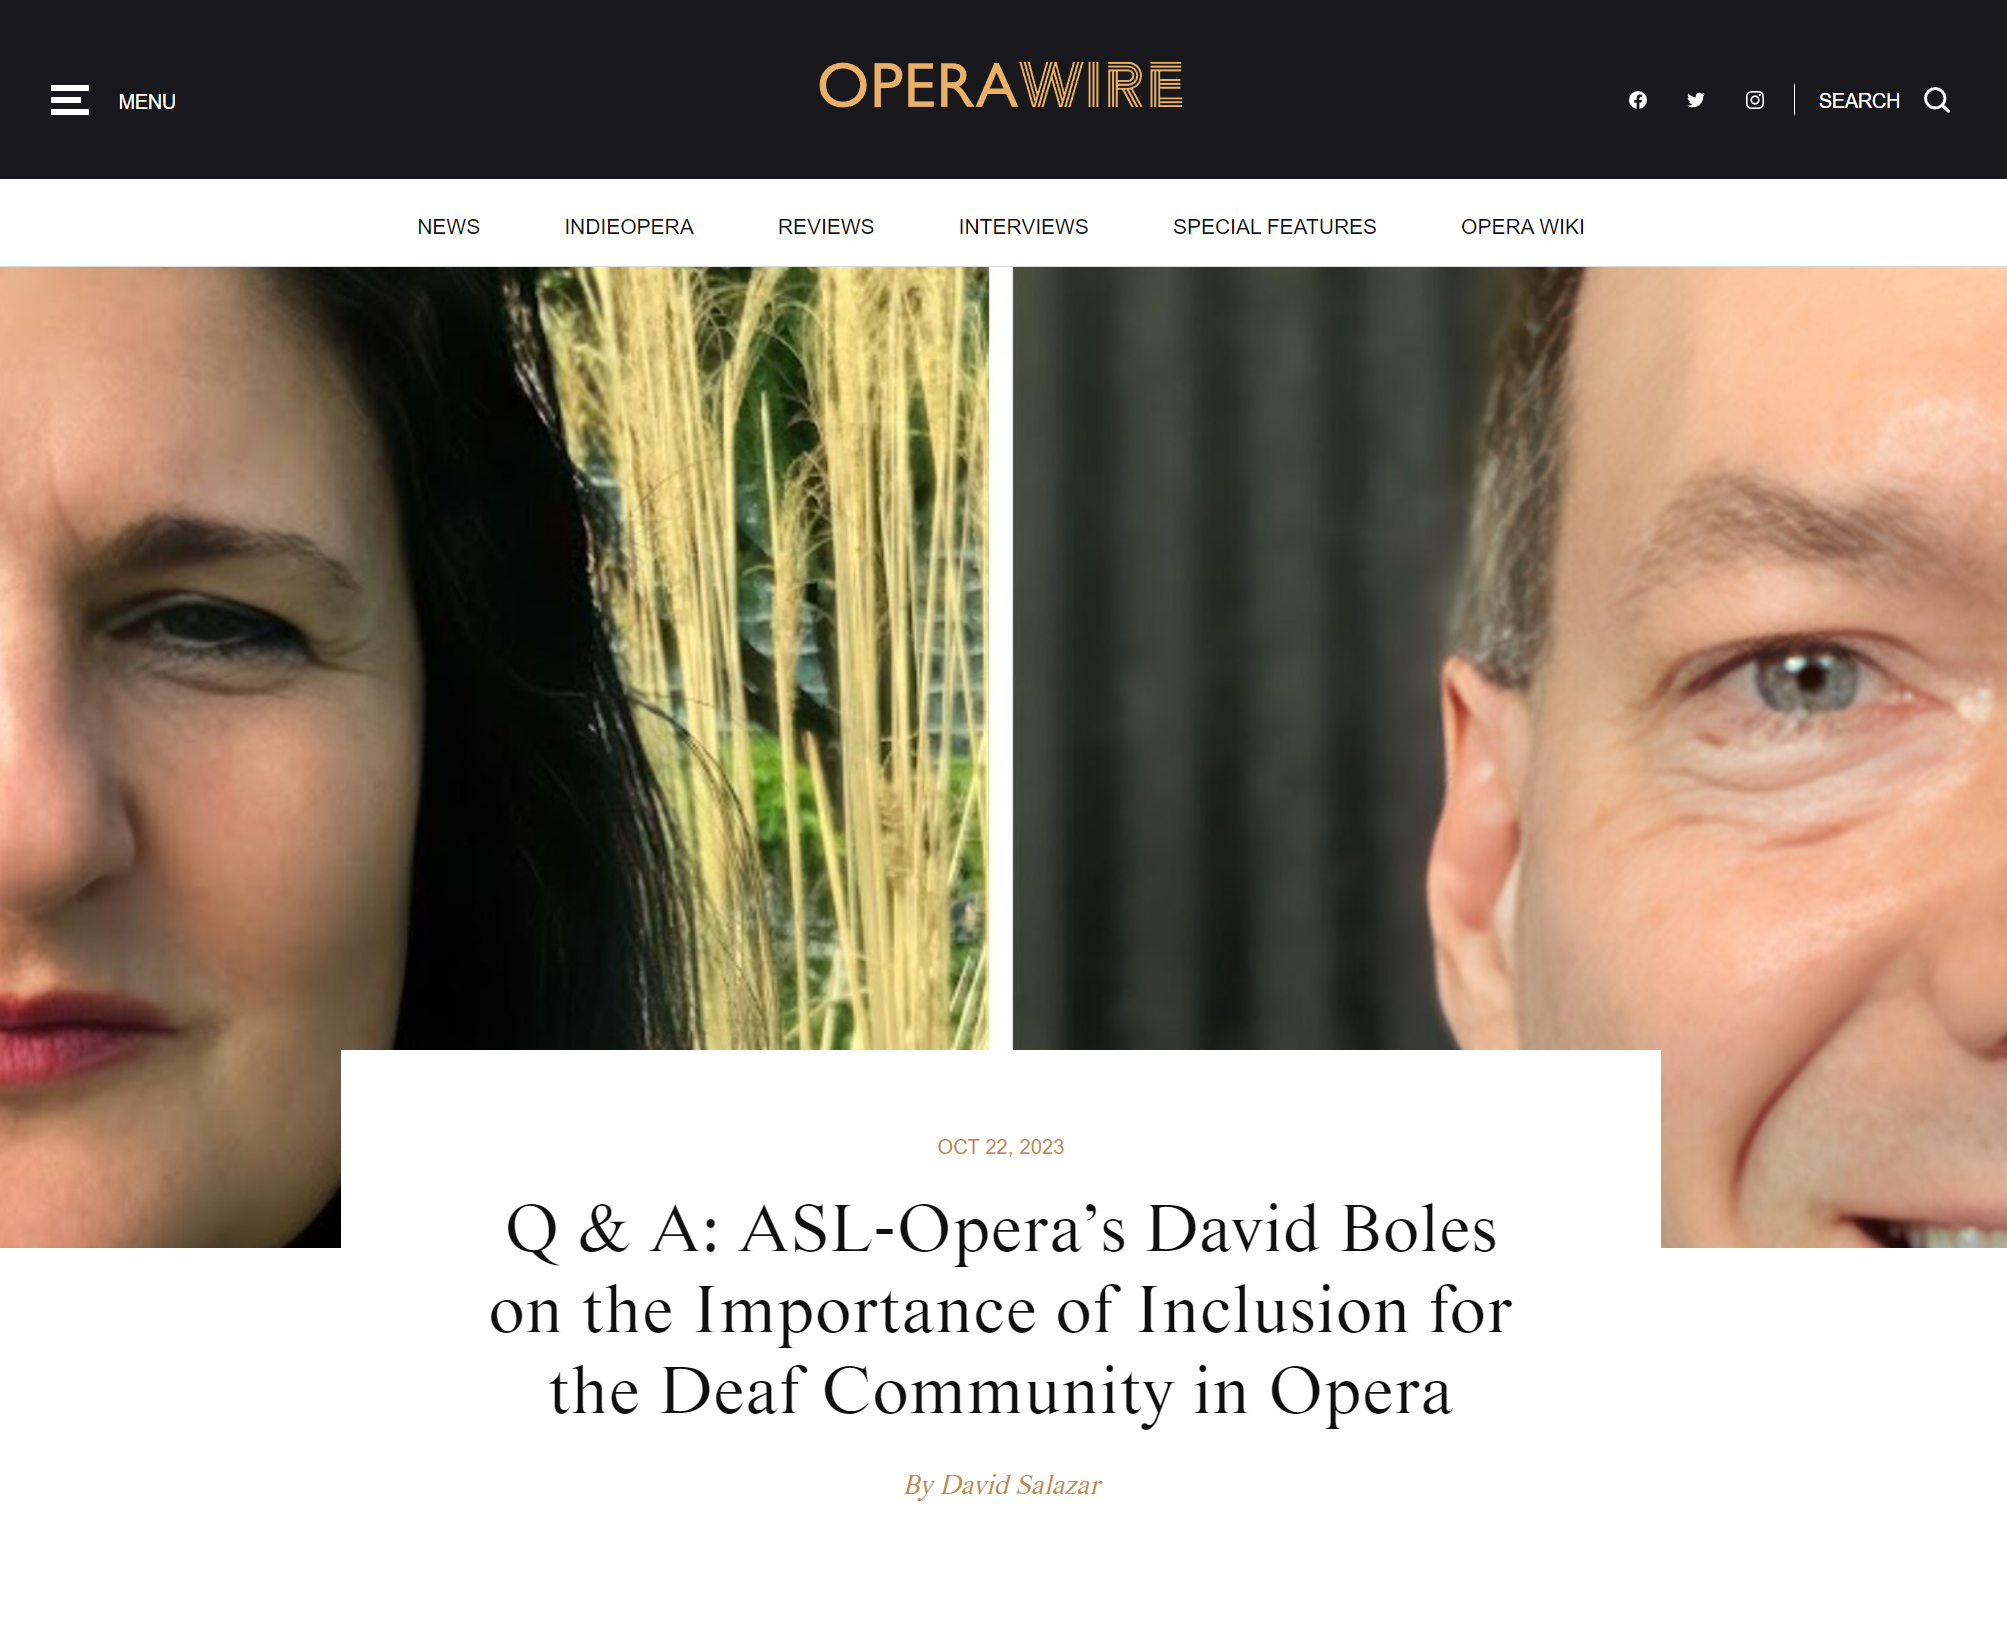 Opera Wire Q&A with David Boles and Janna Sweenie!